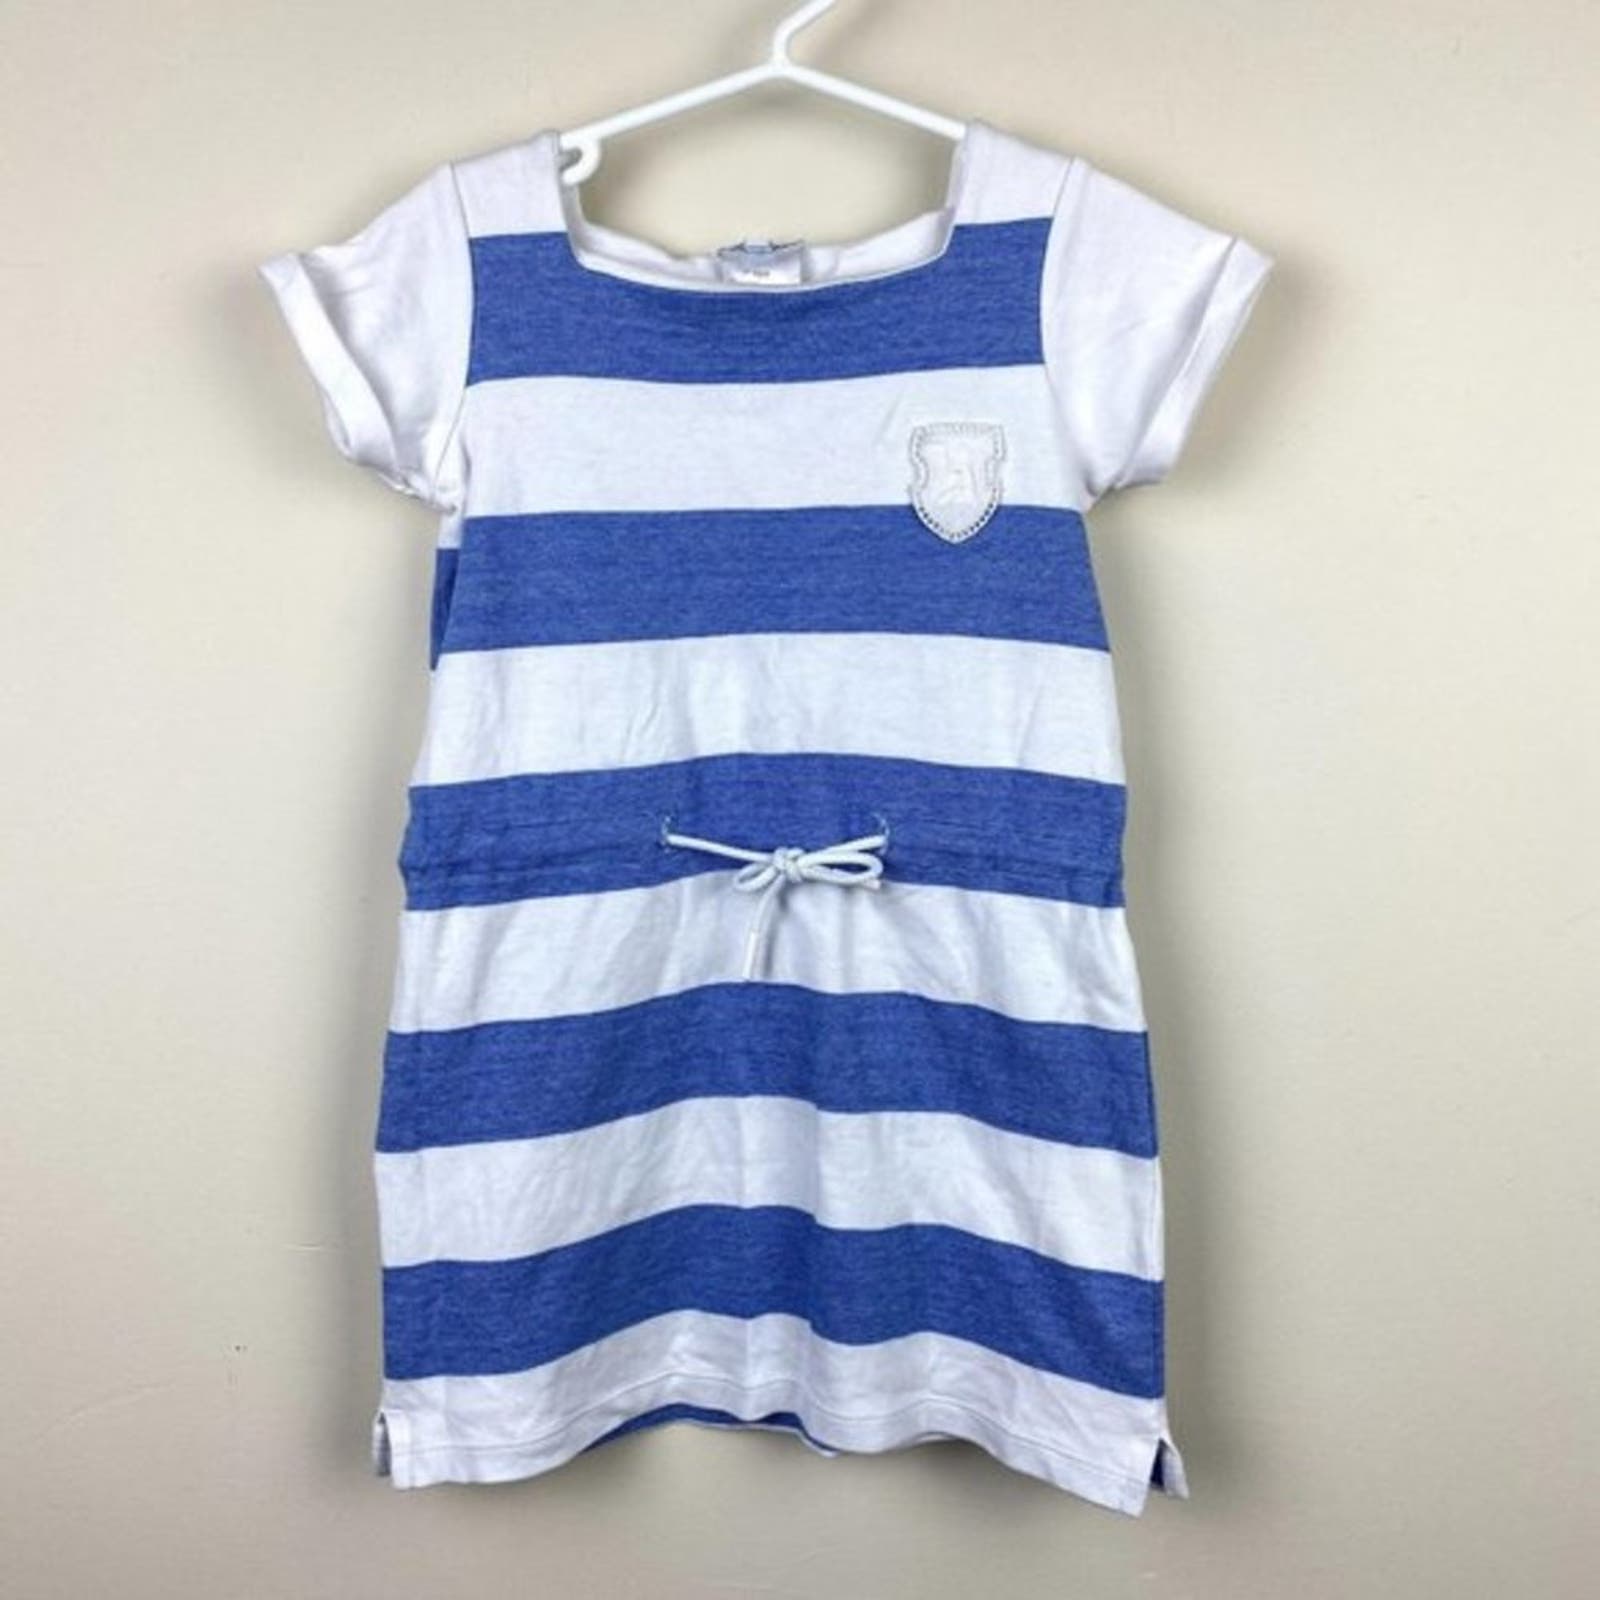 Jacadi Paris Girls Blue & White Striped Dress 4T